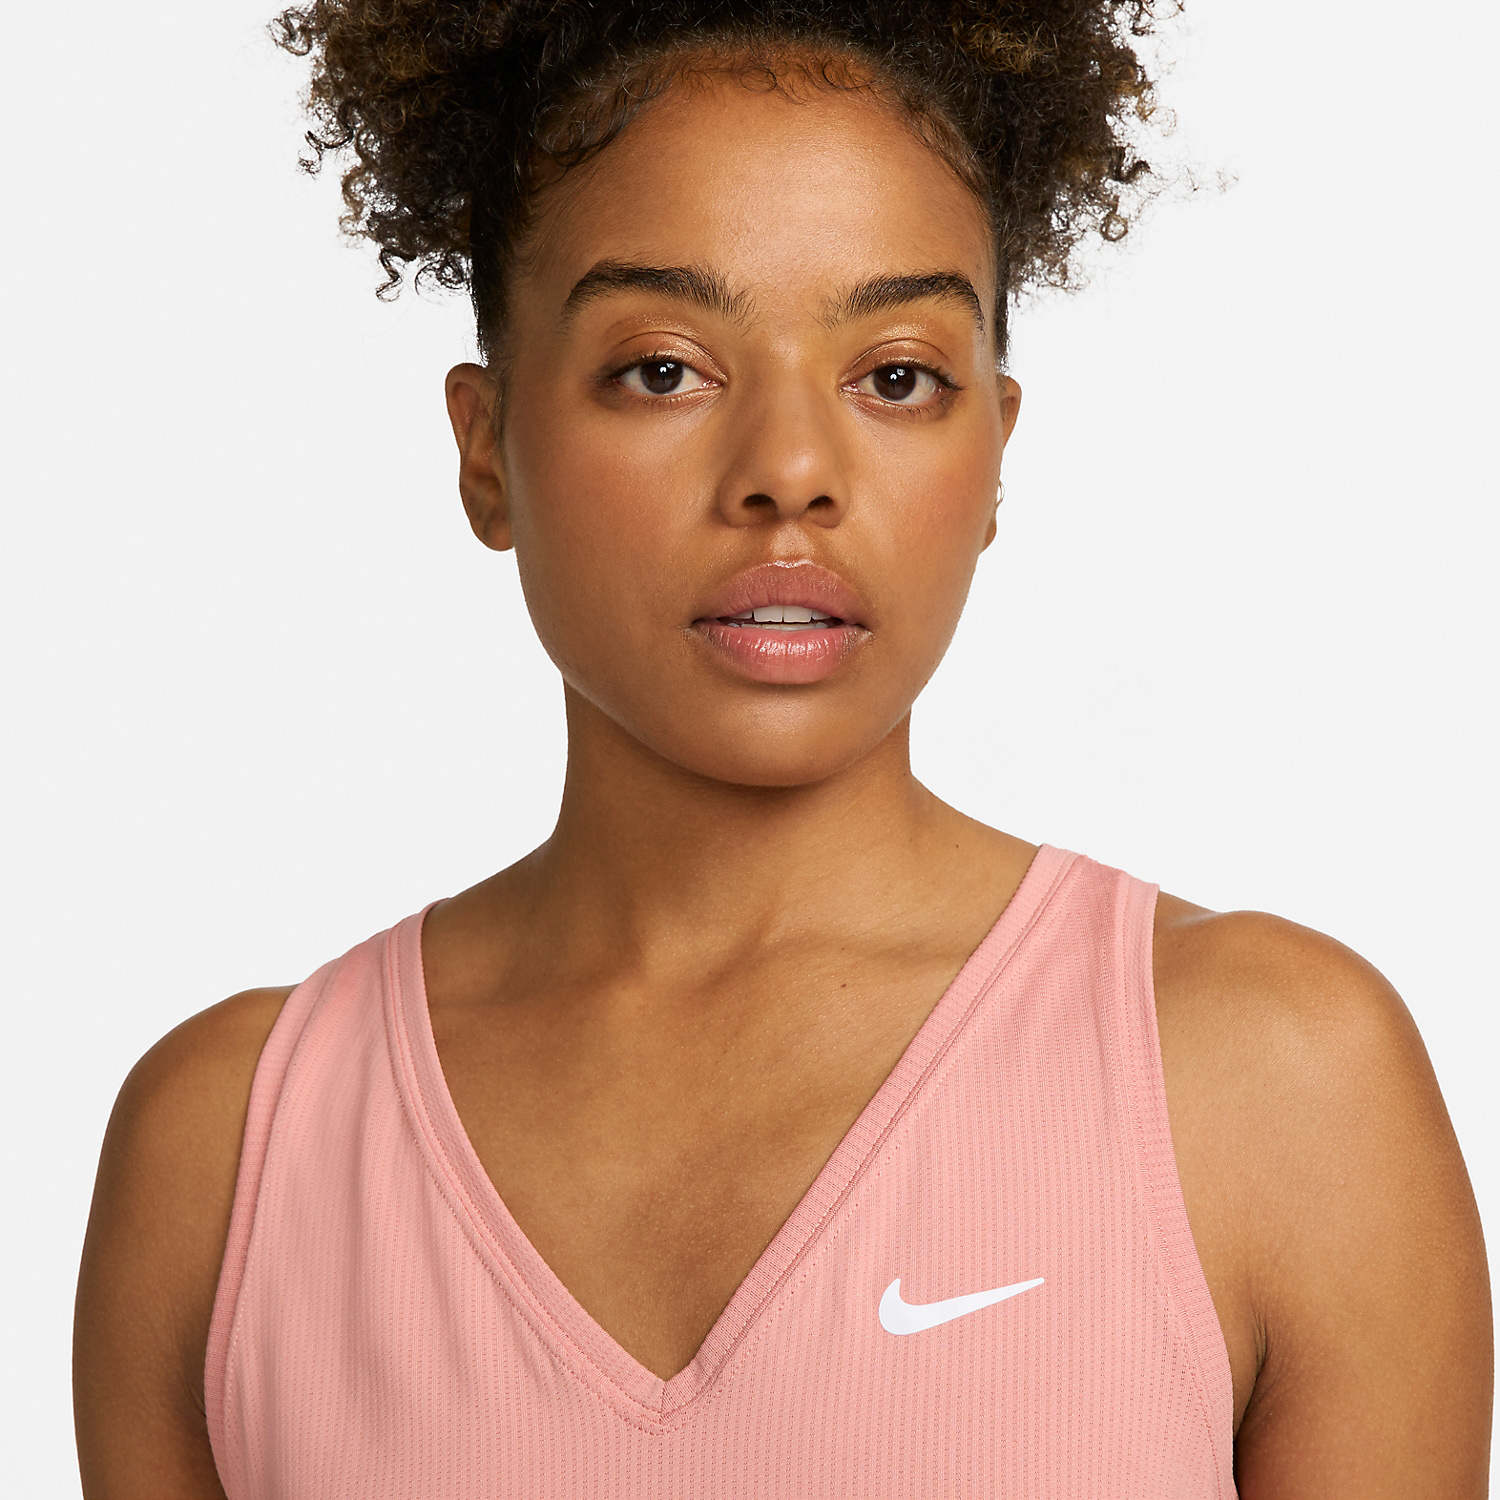 Buy Nike Court Victory Tank Top Women White online